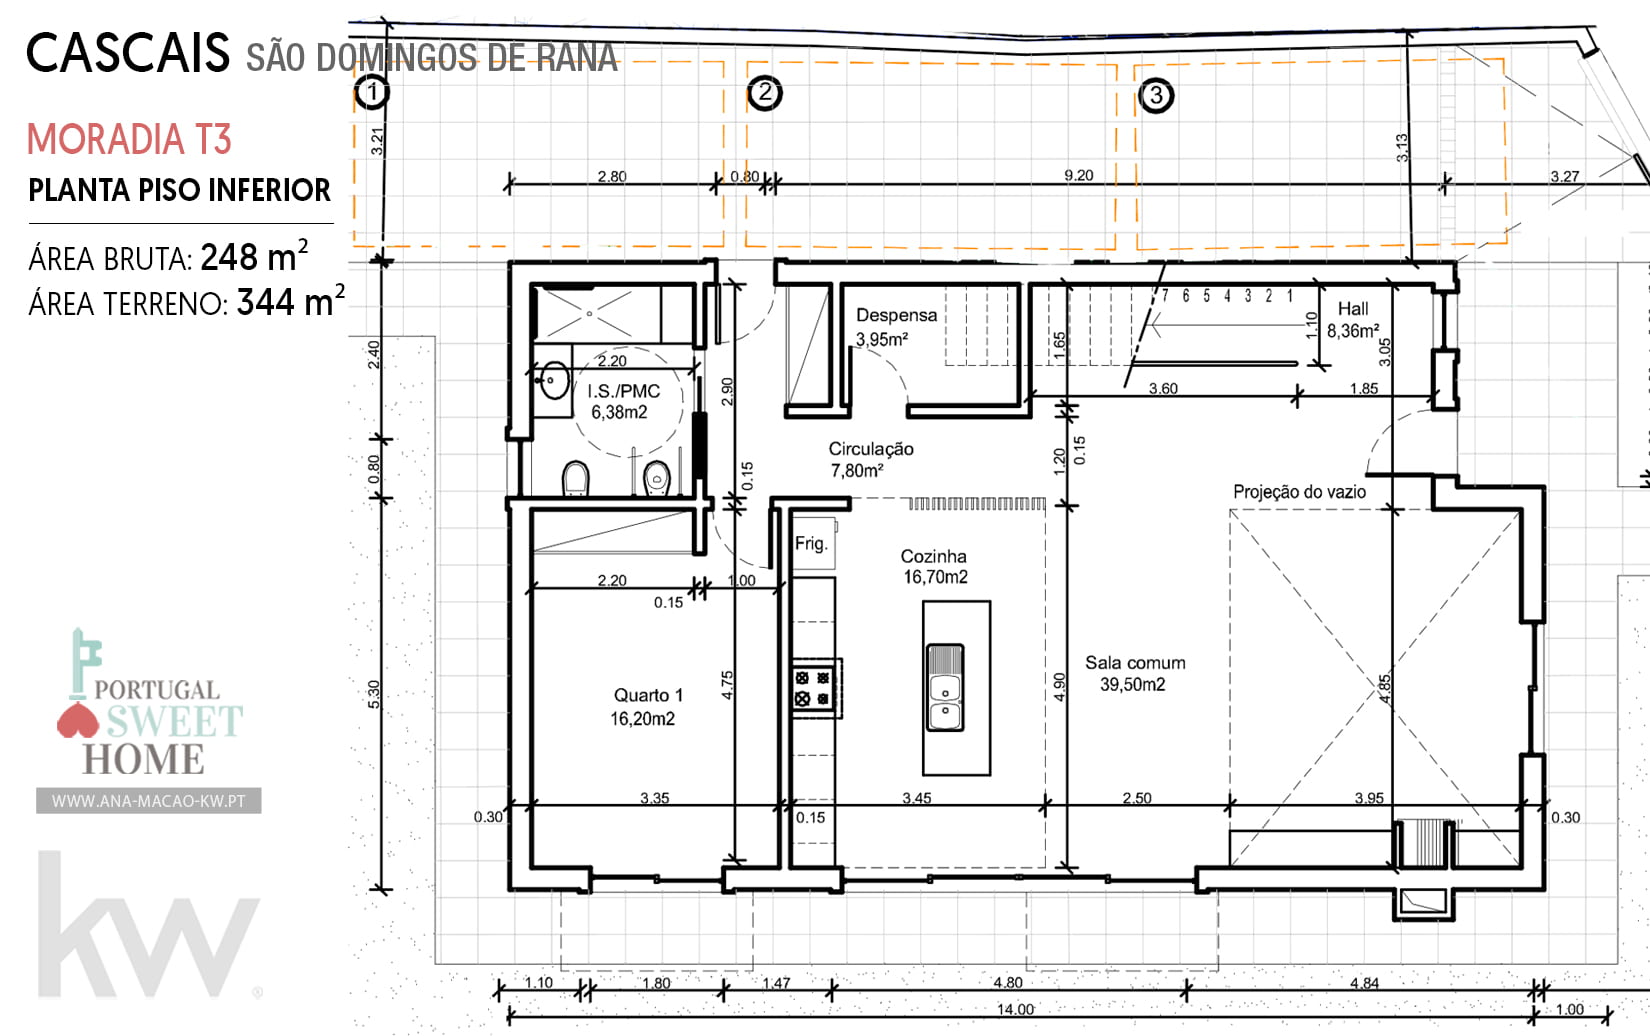 Lower floor plan